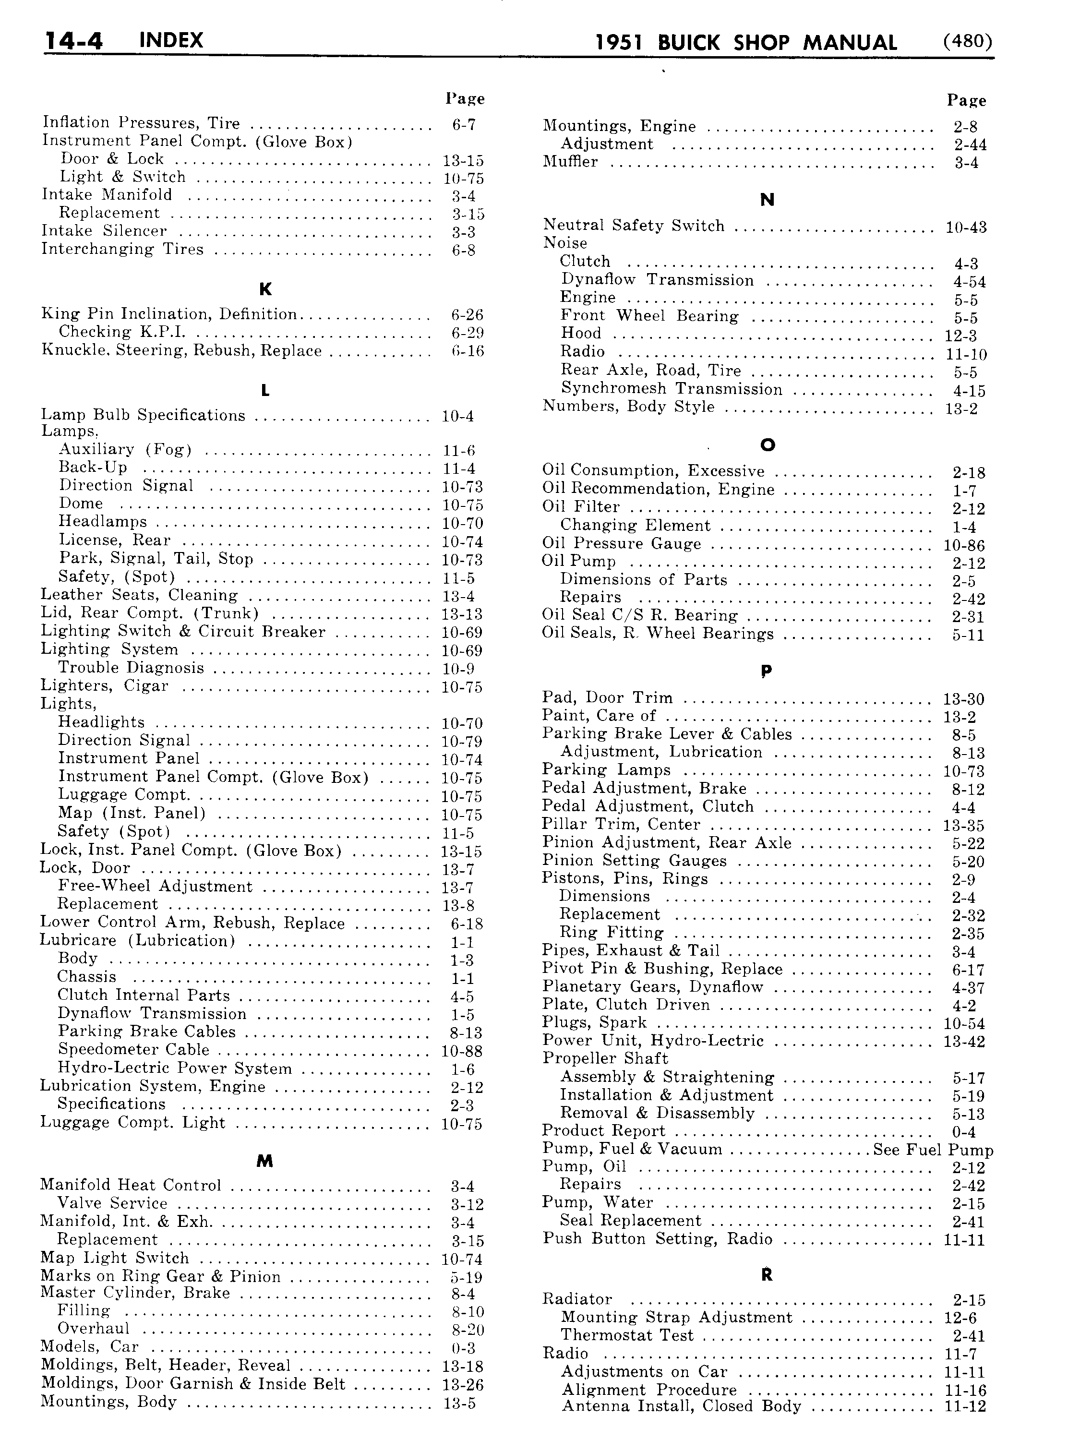 n_15 1951 Buick Shop Manual - Index-004-004.jpg